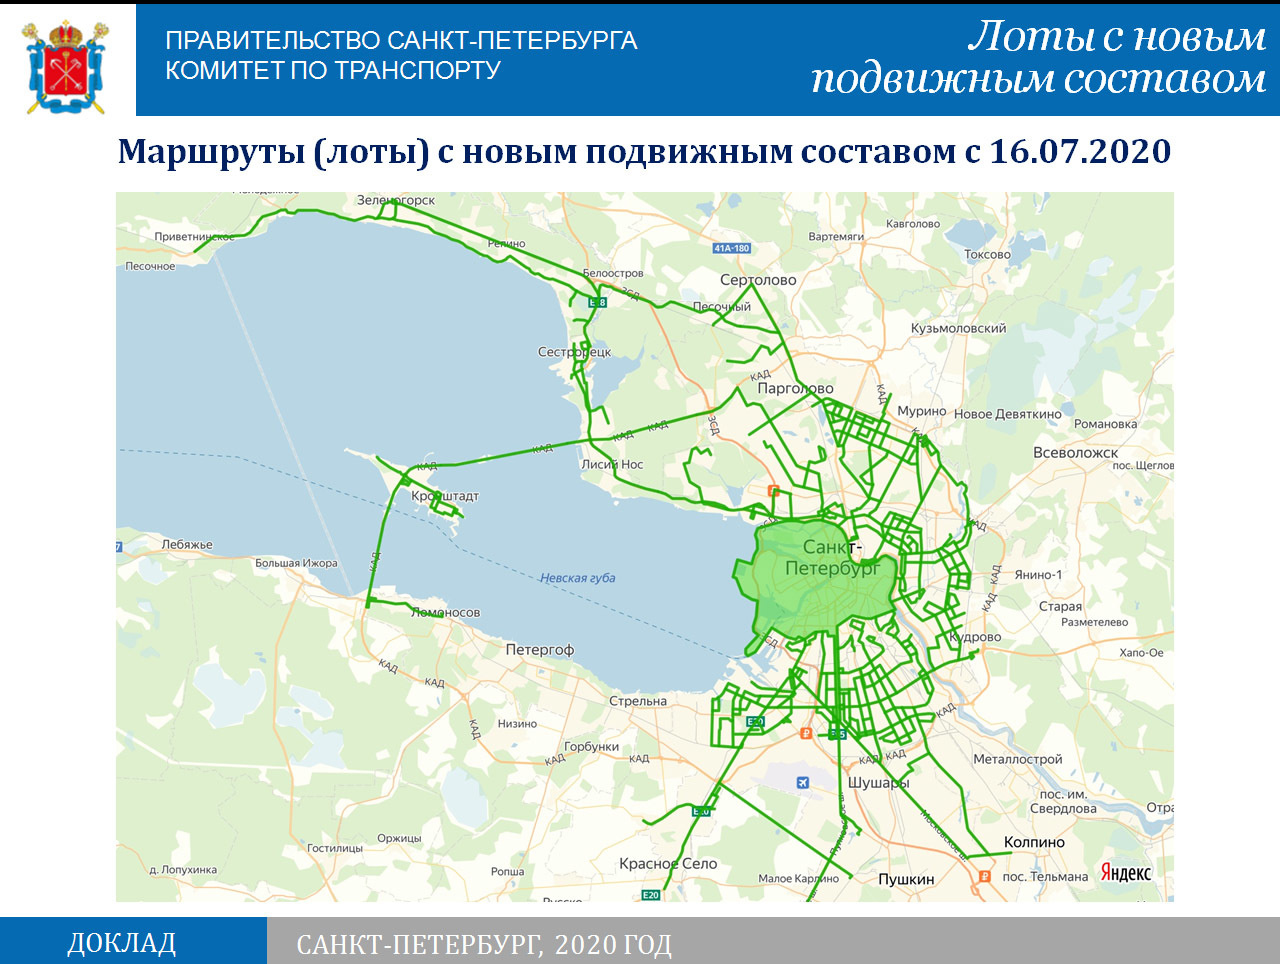 Комитет по транспорту Санкт-Петербурга